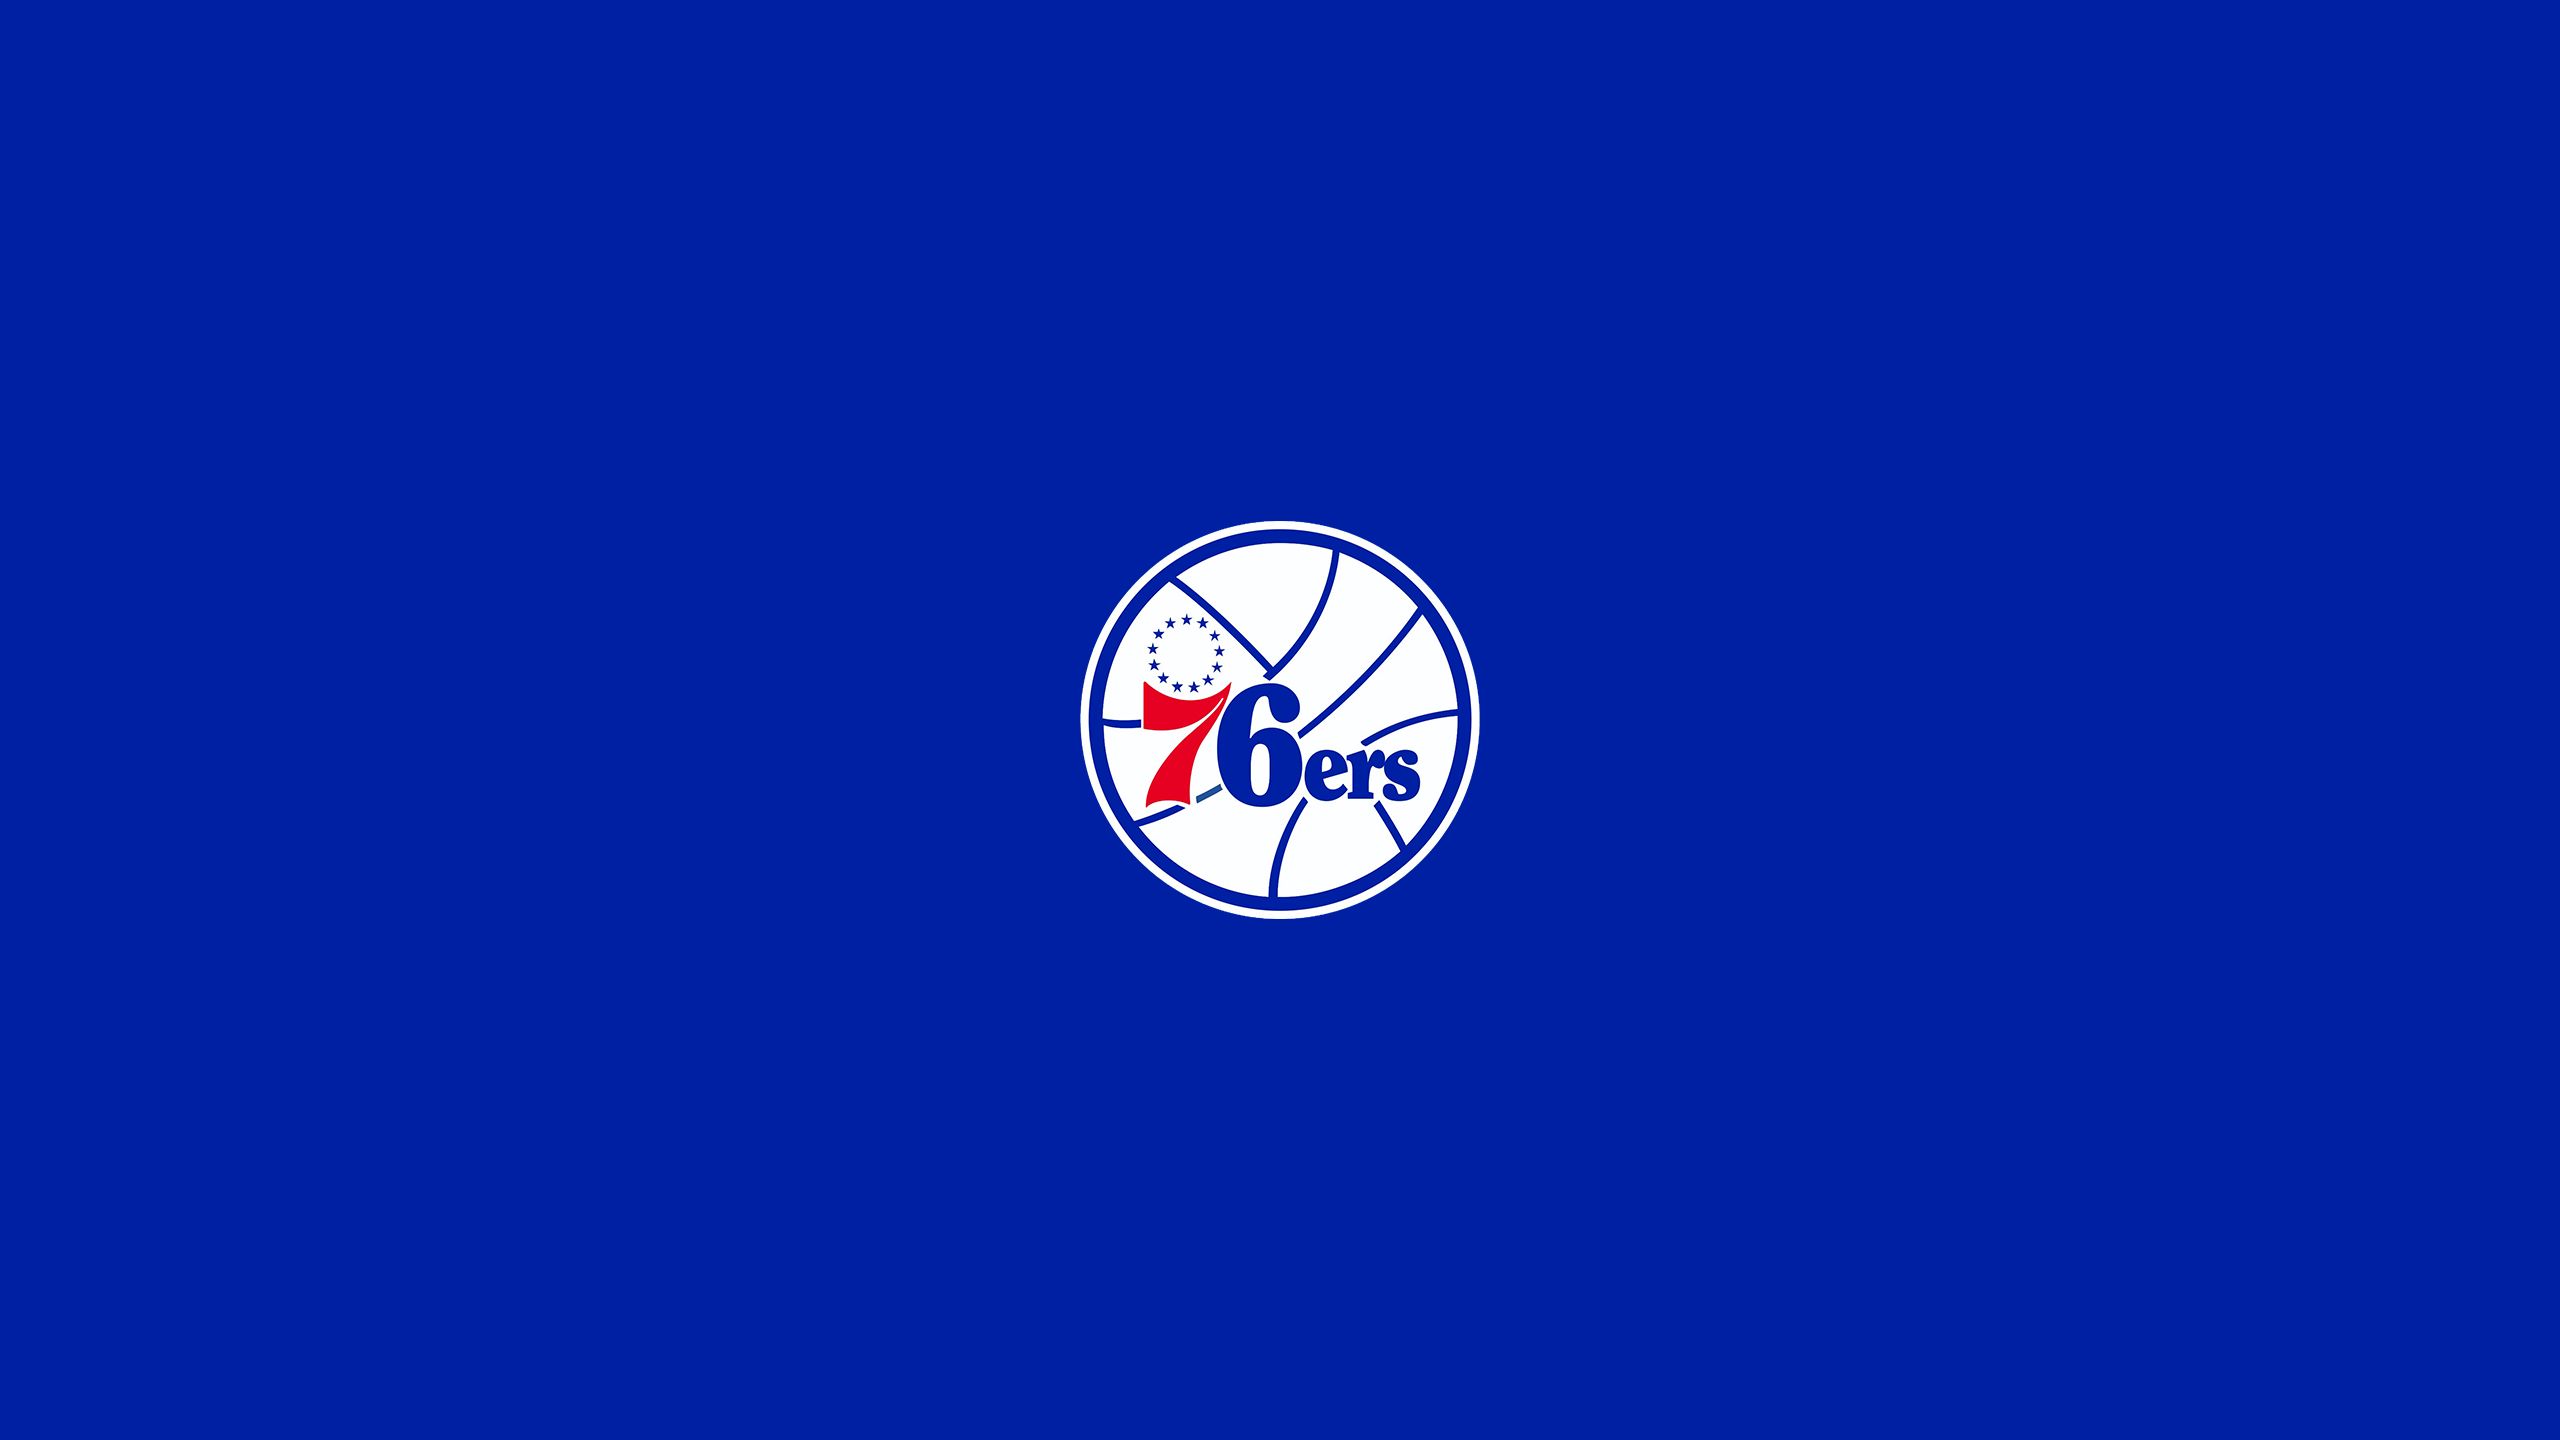 Descarga gratuita de fondo de pantalla para móvil de Baloncesto, Logo, Emblema, Nba, Deporte, Filadelfia 76Ers.